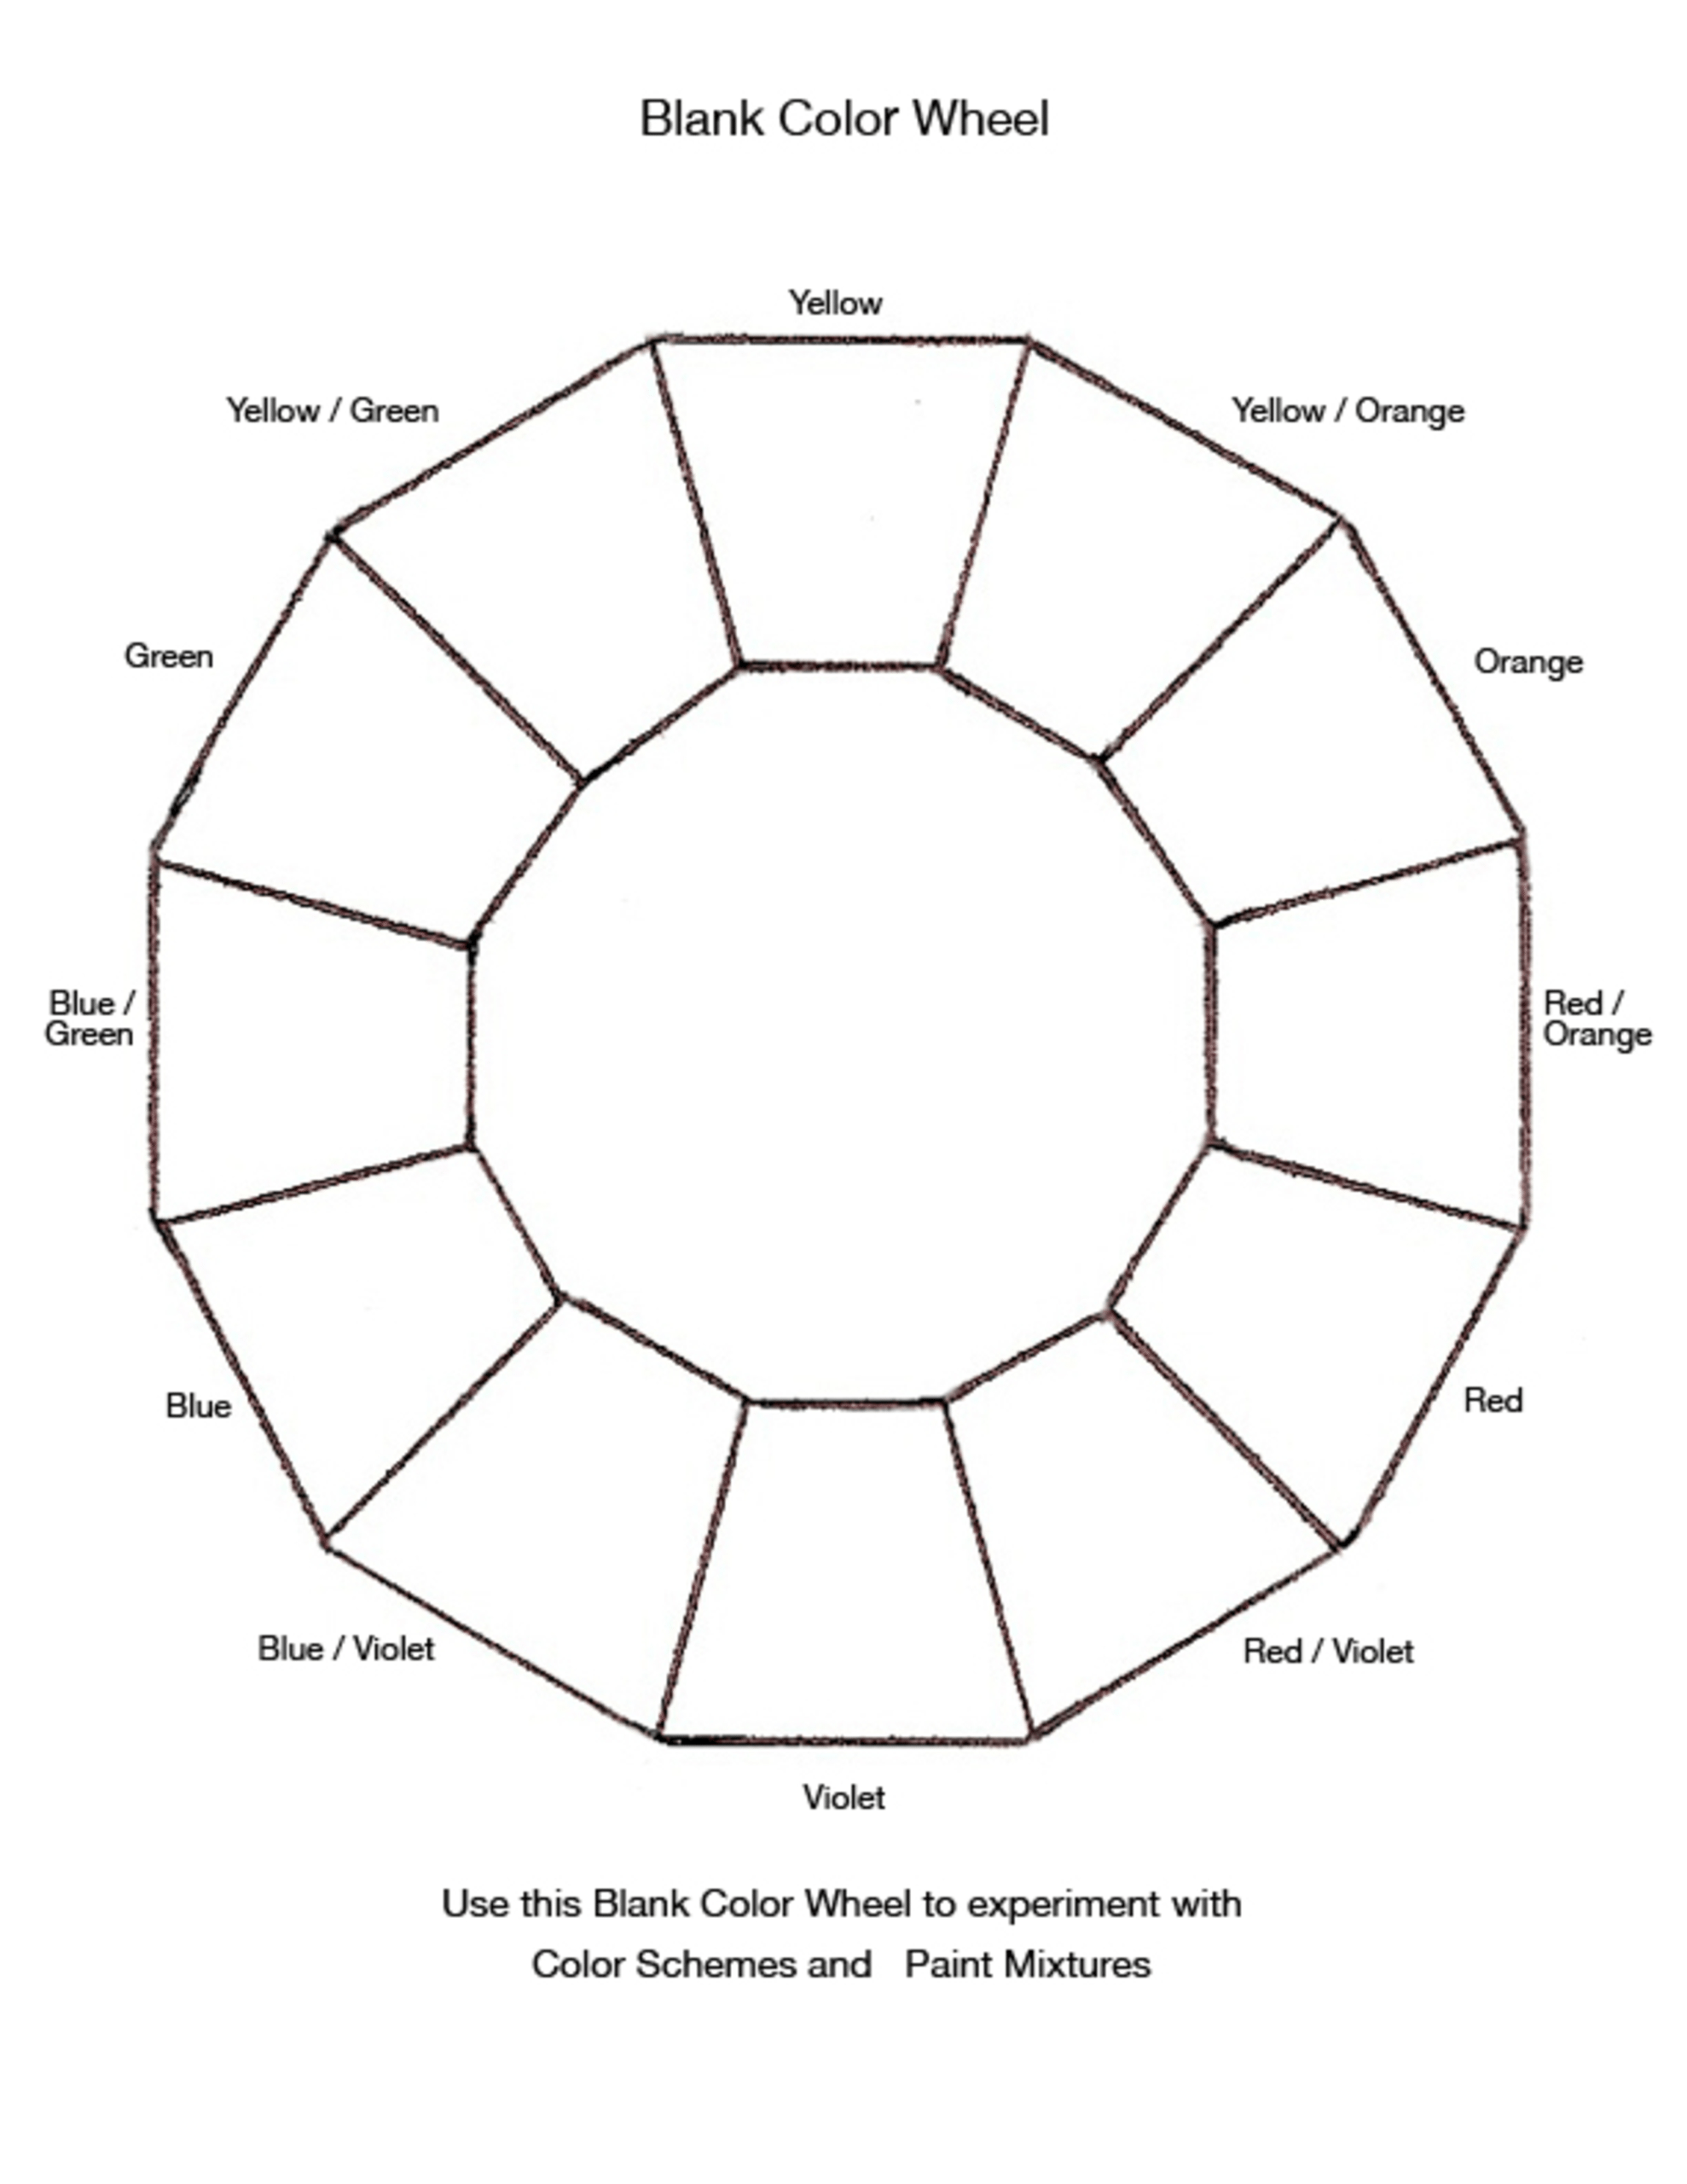 Blank Color Wheel Chart | Templates At Allbusinesstemplates Throughout Blank Color Wheel Template